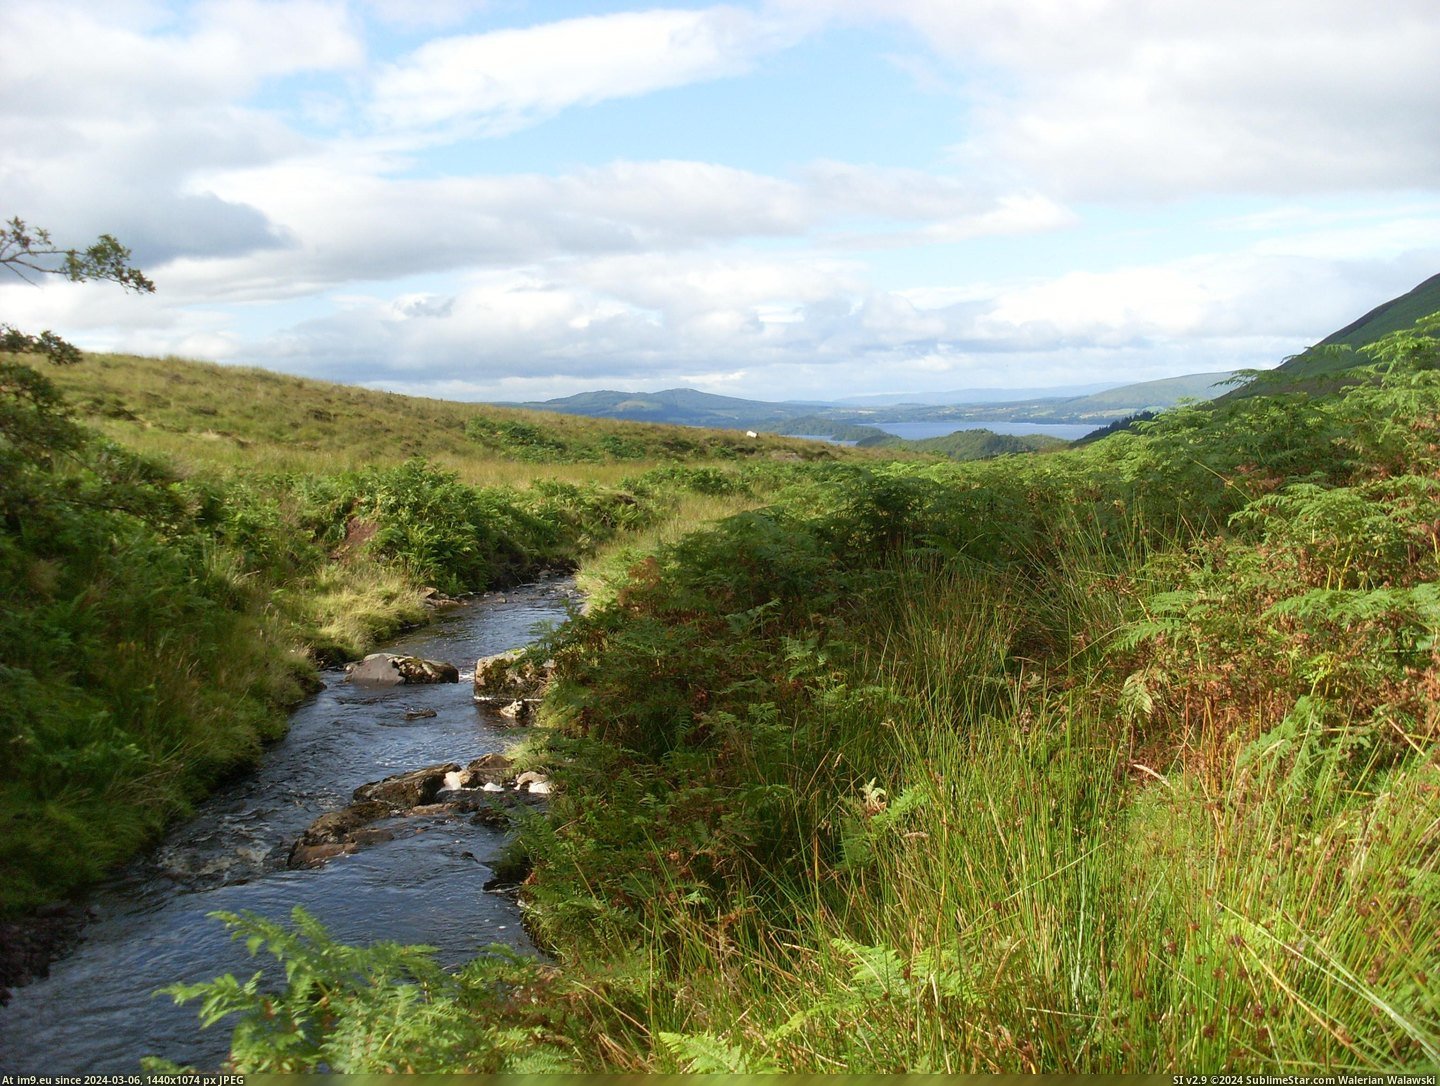 #Scotland #Hiking #Loch #3072x2304 #Overlooking [Earthporn] Hiking in Scotland, overlooking Loch Lomond [3072x2304] Pic. (Bild von album My r/EARTHPORN favs))